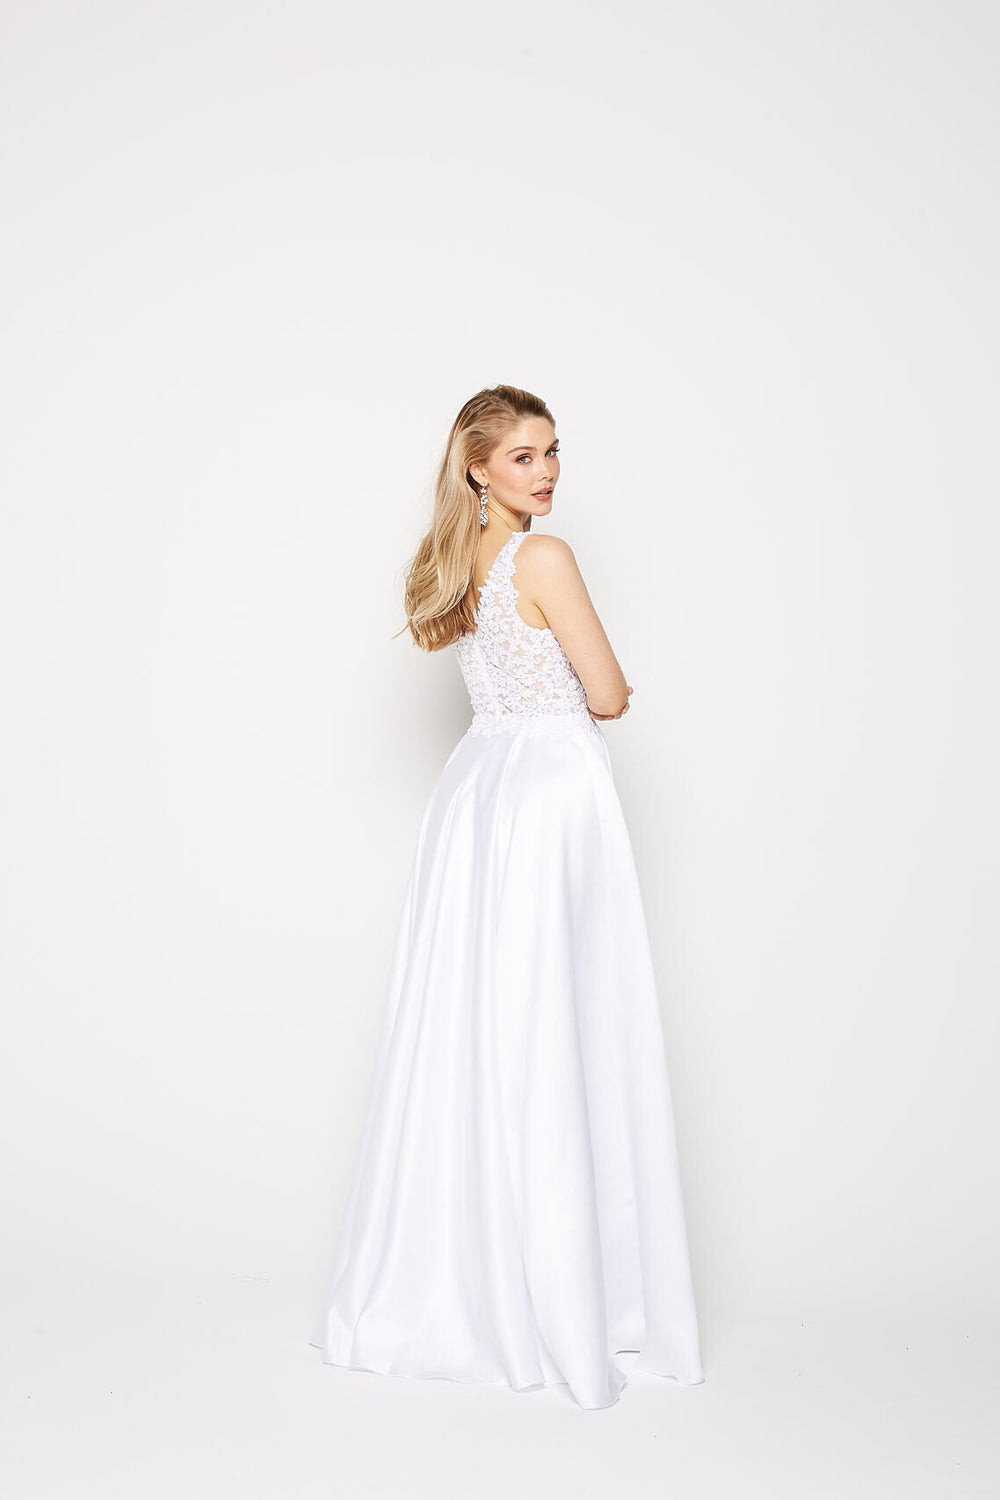 Eden Dress in White by Tania Olsen PO2319 - ElissaJay Boutique